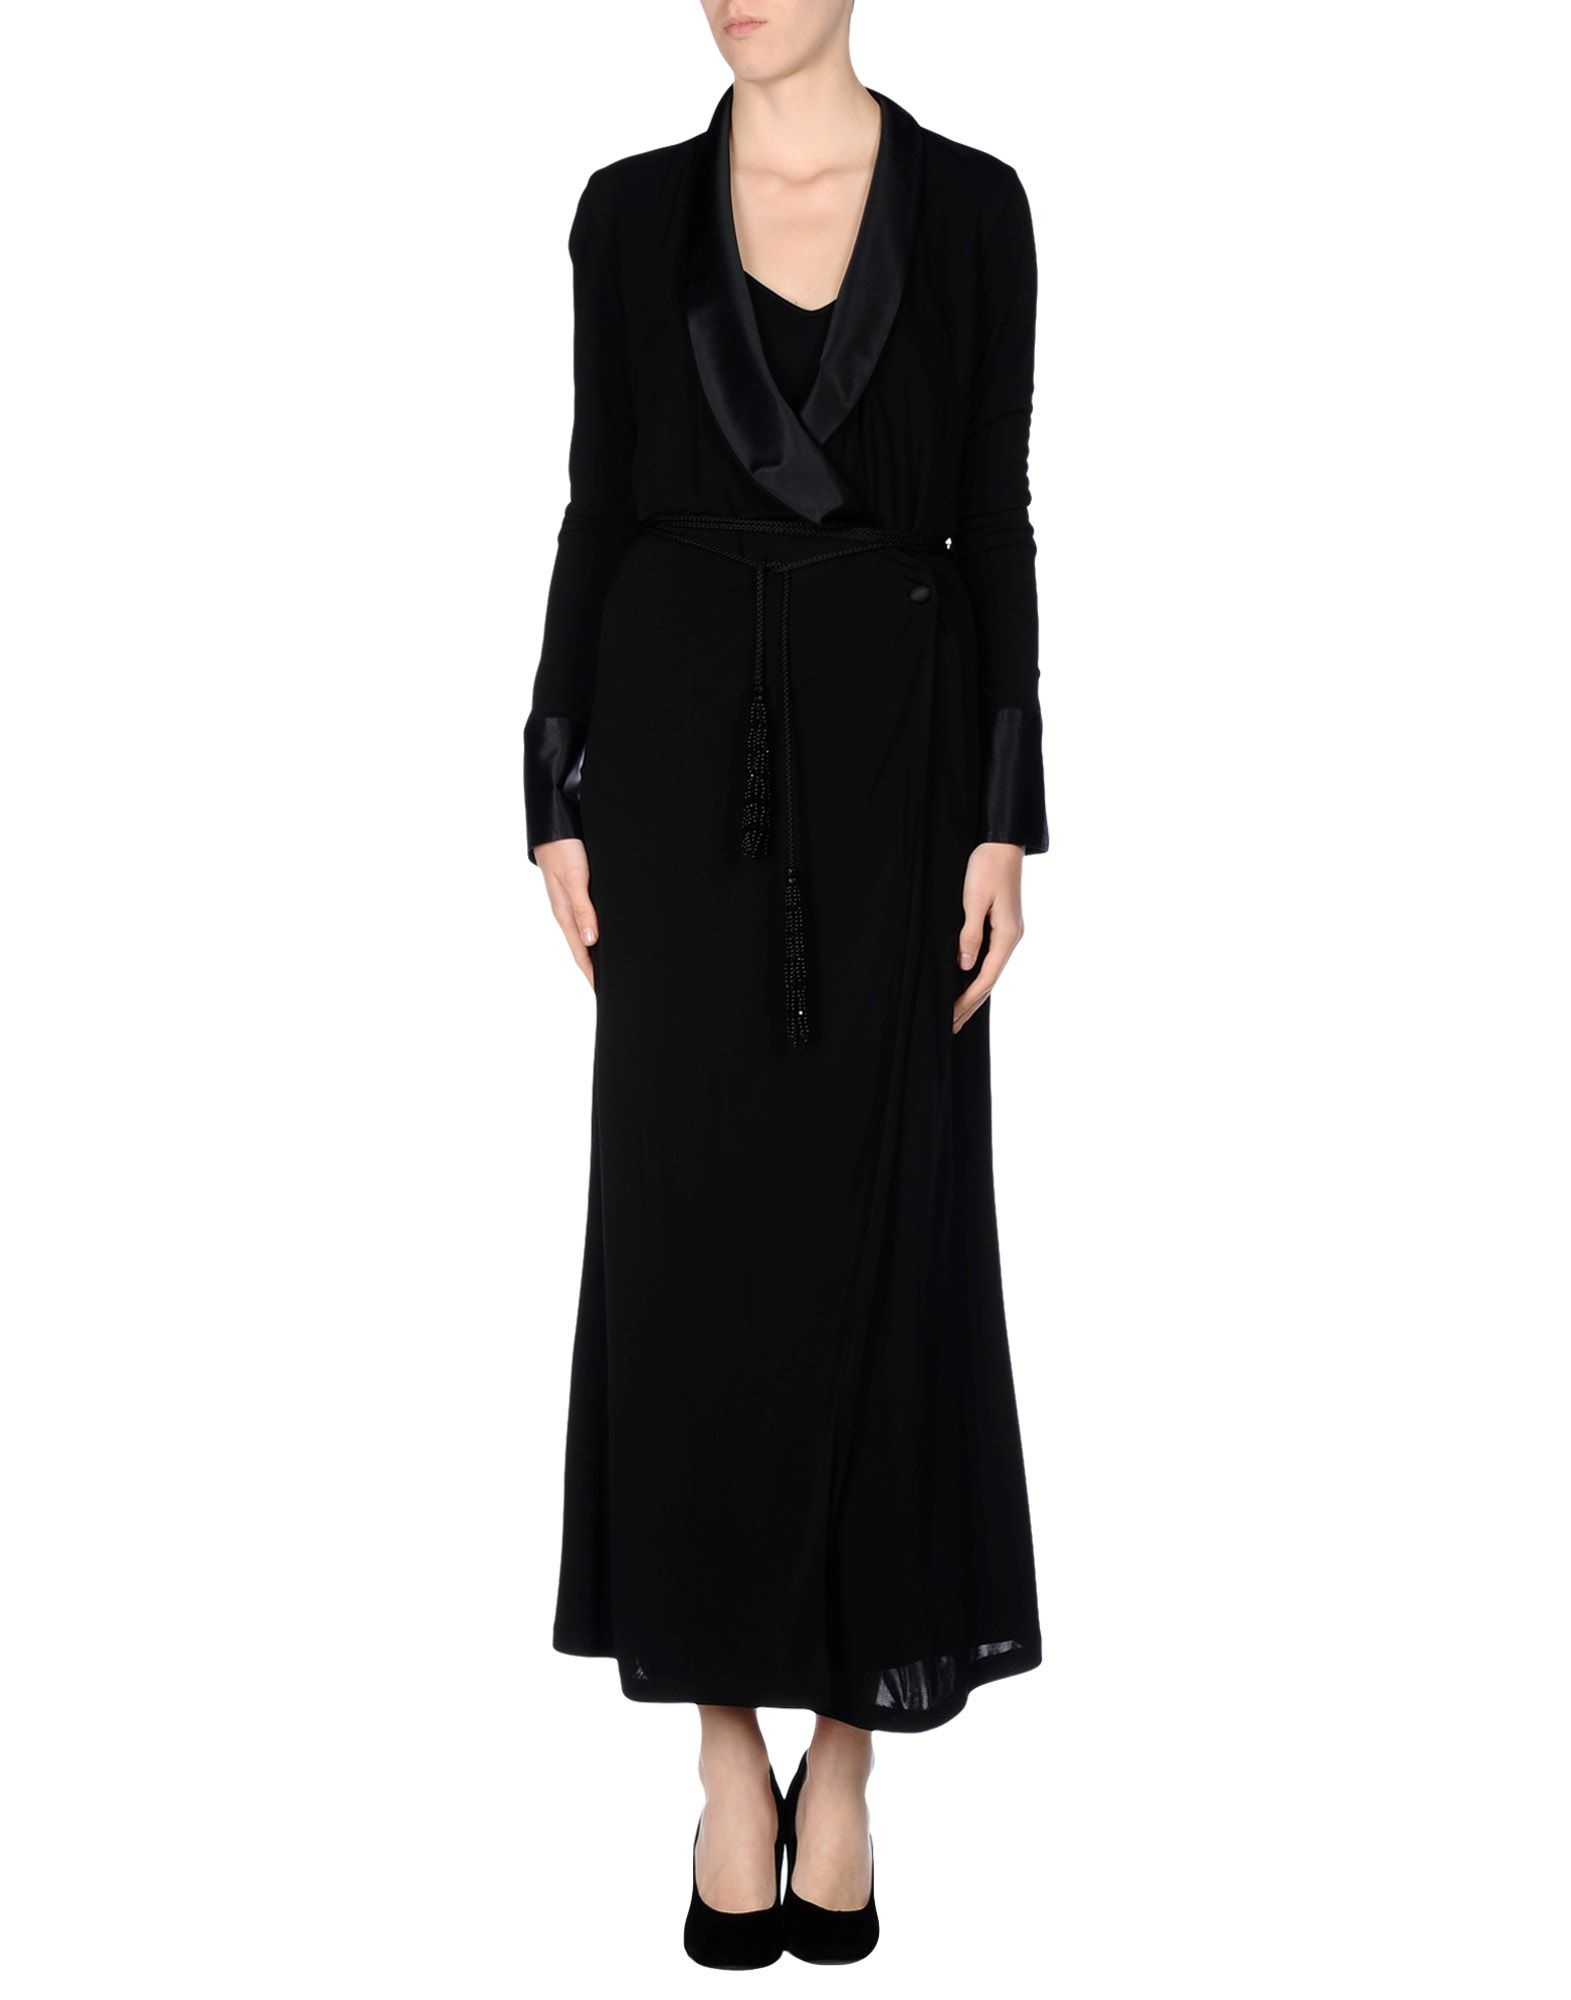 Lyst - Ralph Lauren Long Dress in Black